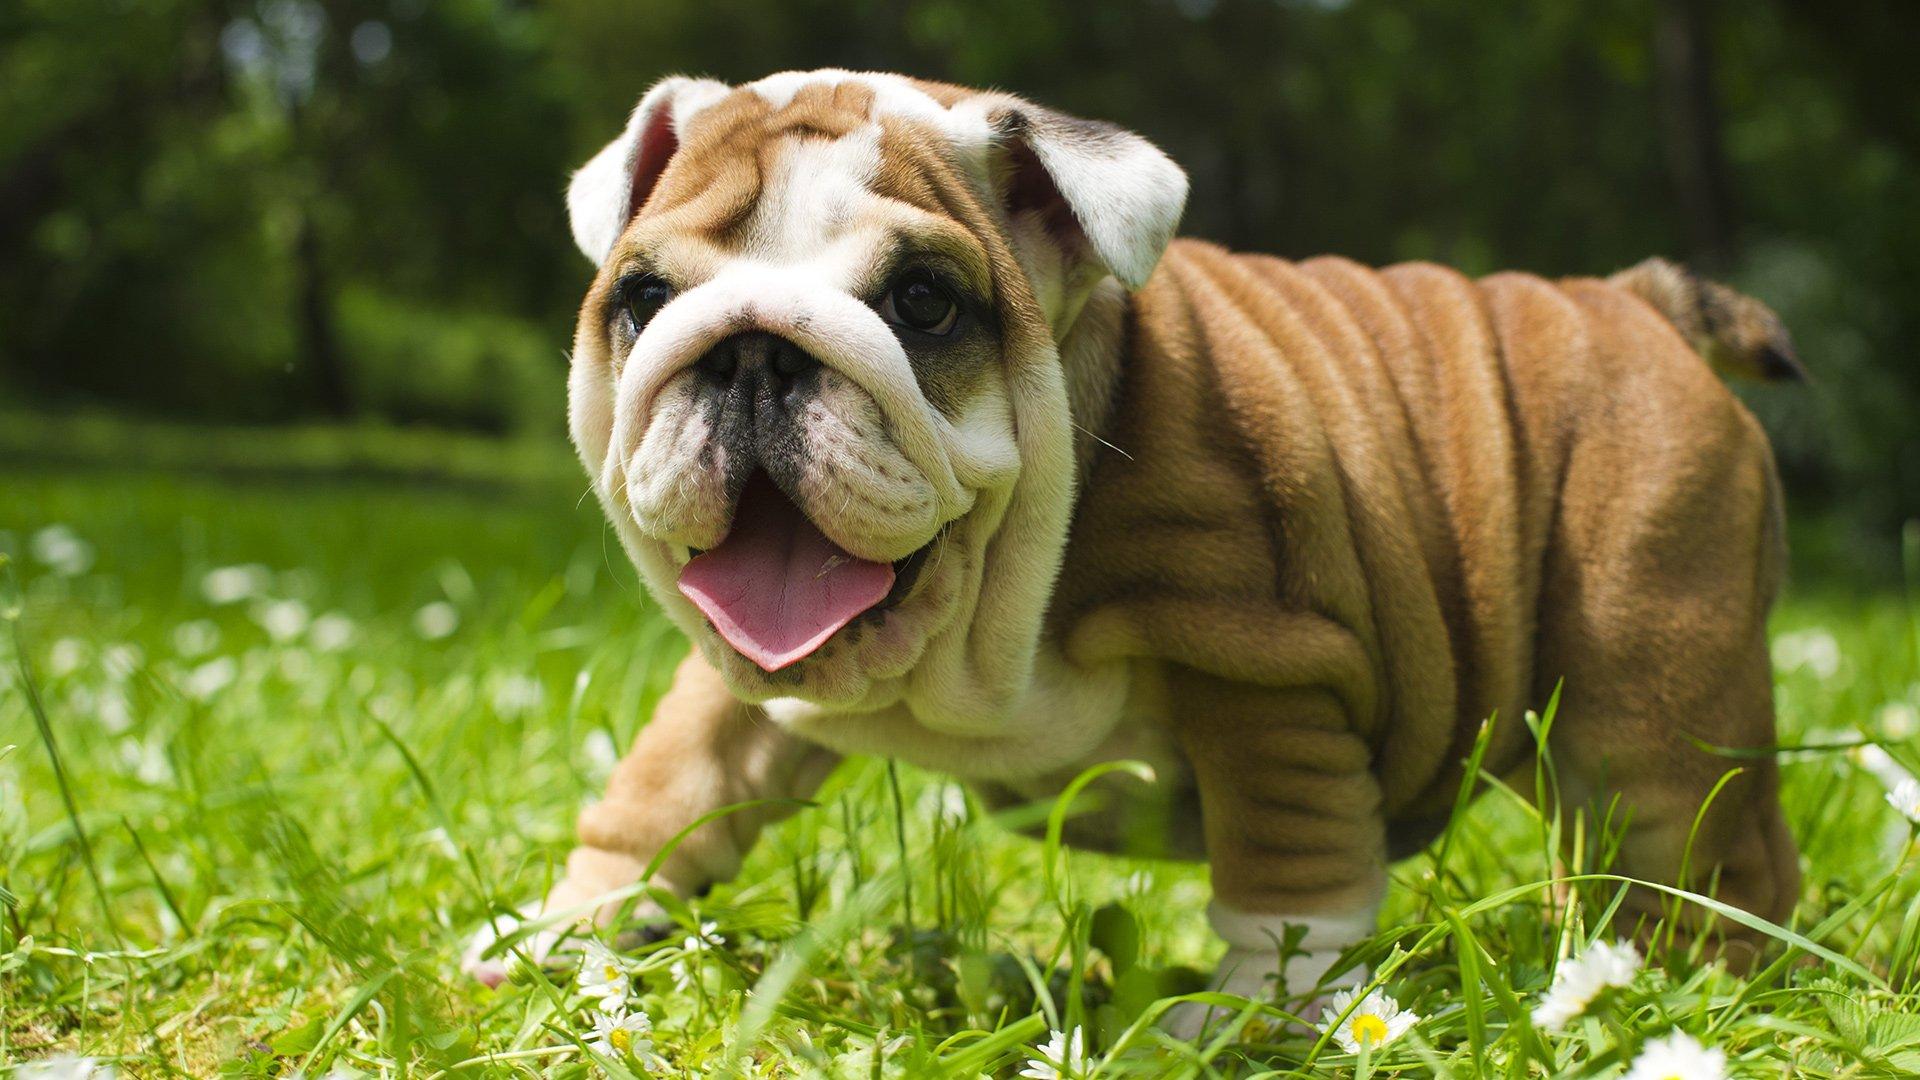 Stunning Bulldog Puppy Wallpaper image For Free Download